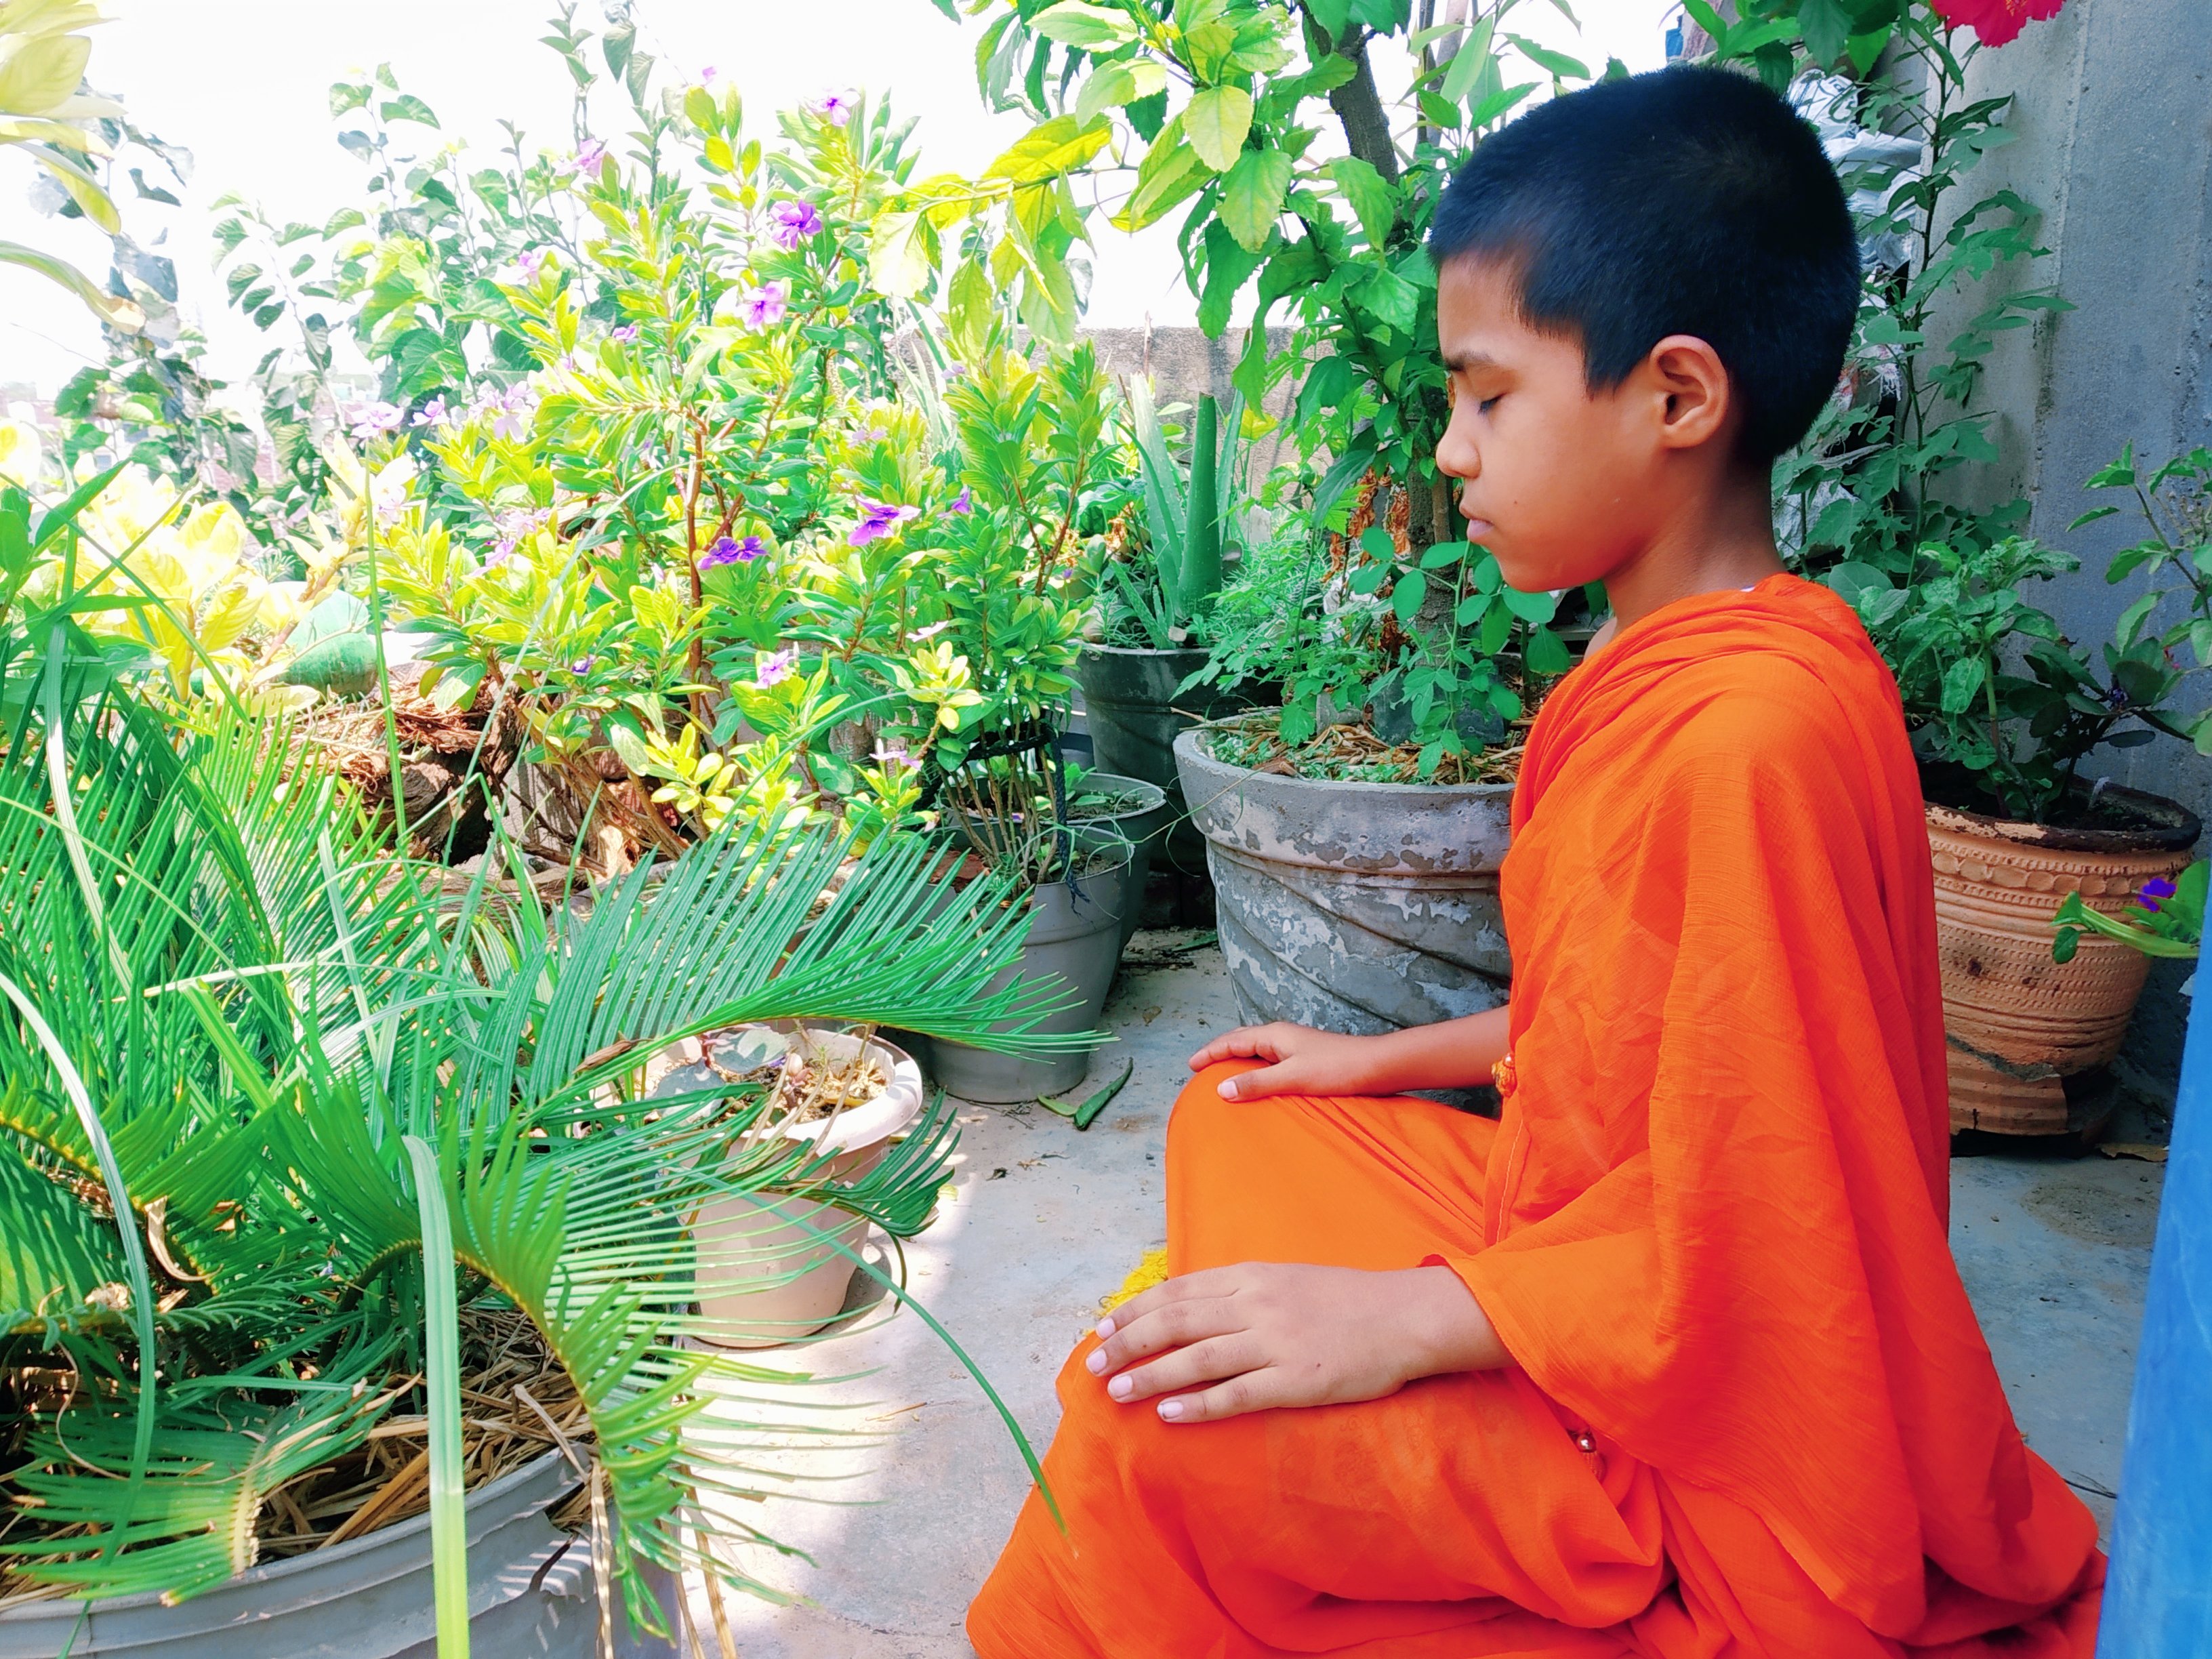 Children dressed as Gautama Buddha and reminicsing the teachings of him